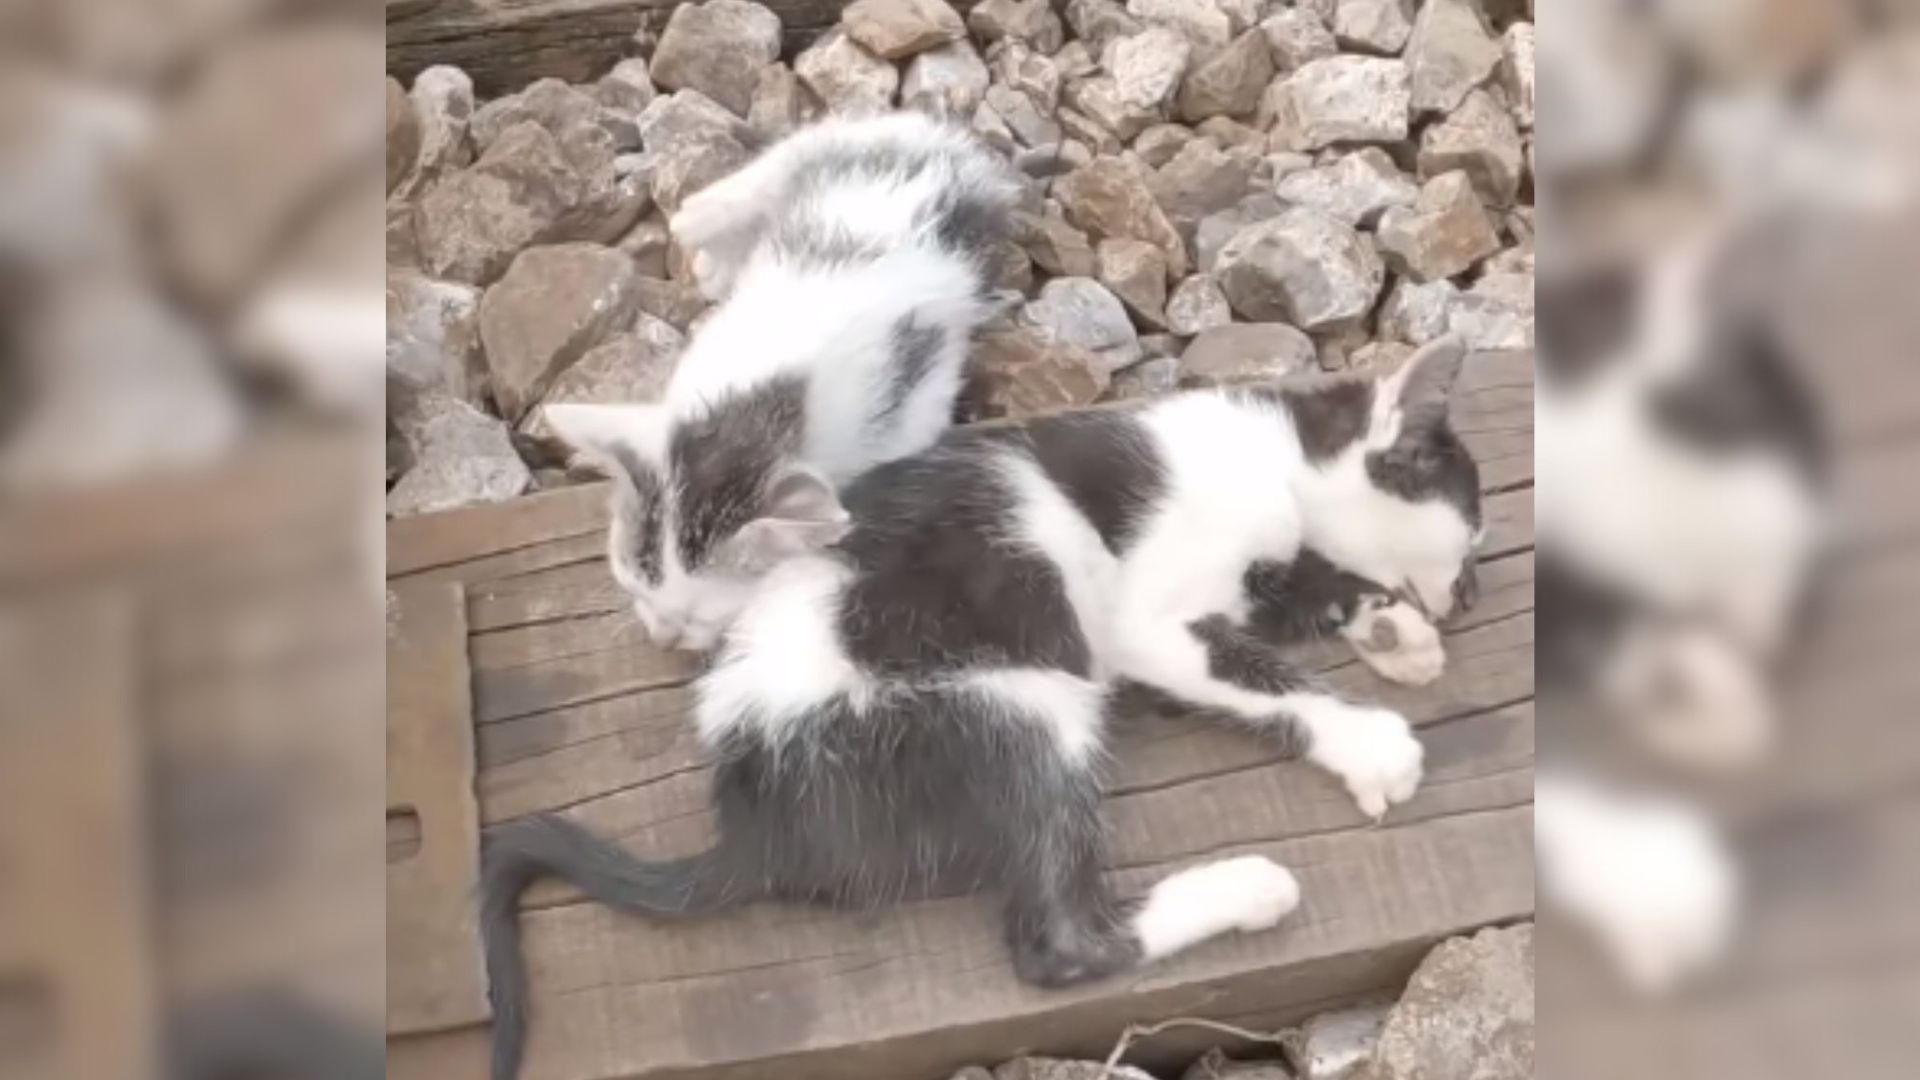 two kittens on railroad